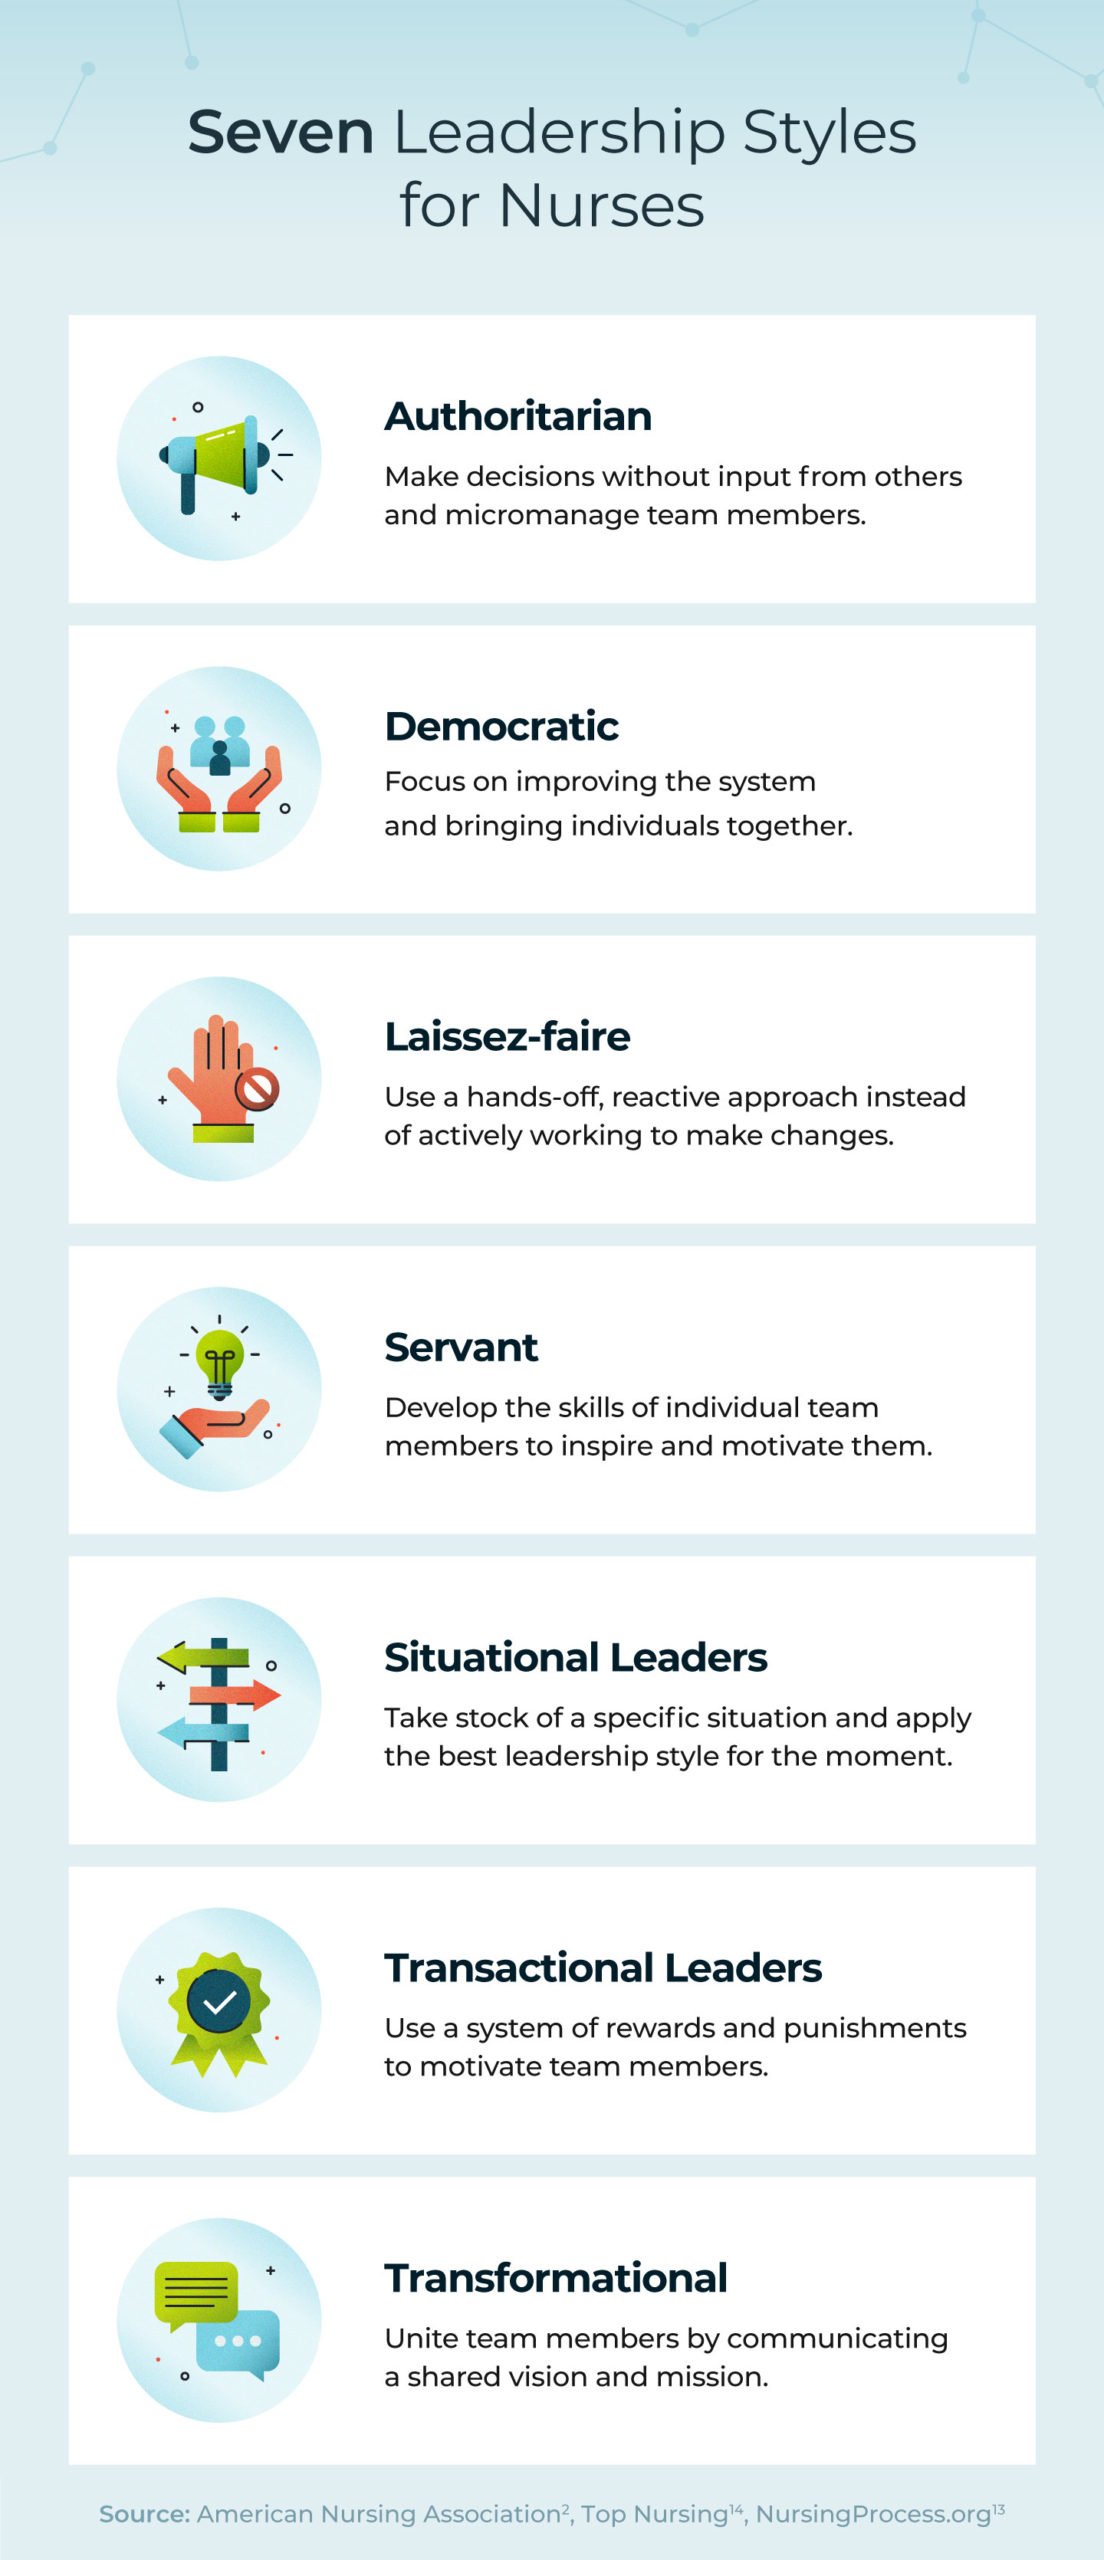 Seven leadership styles for nurses.